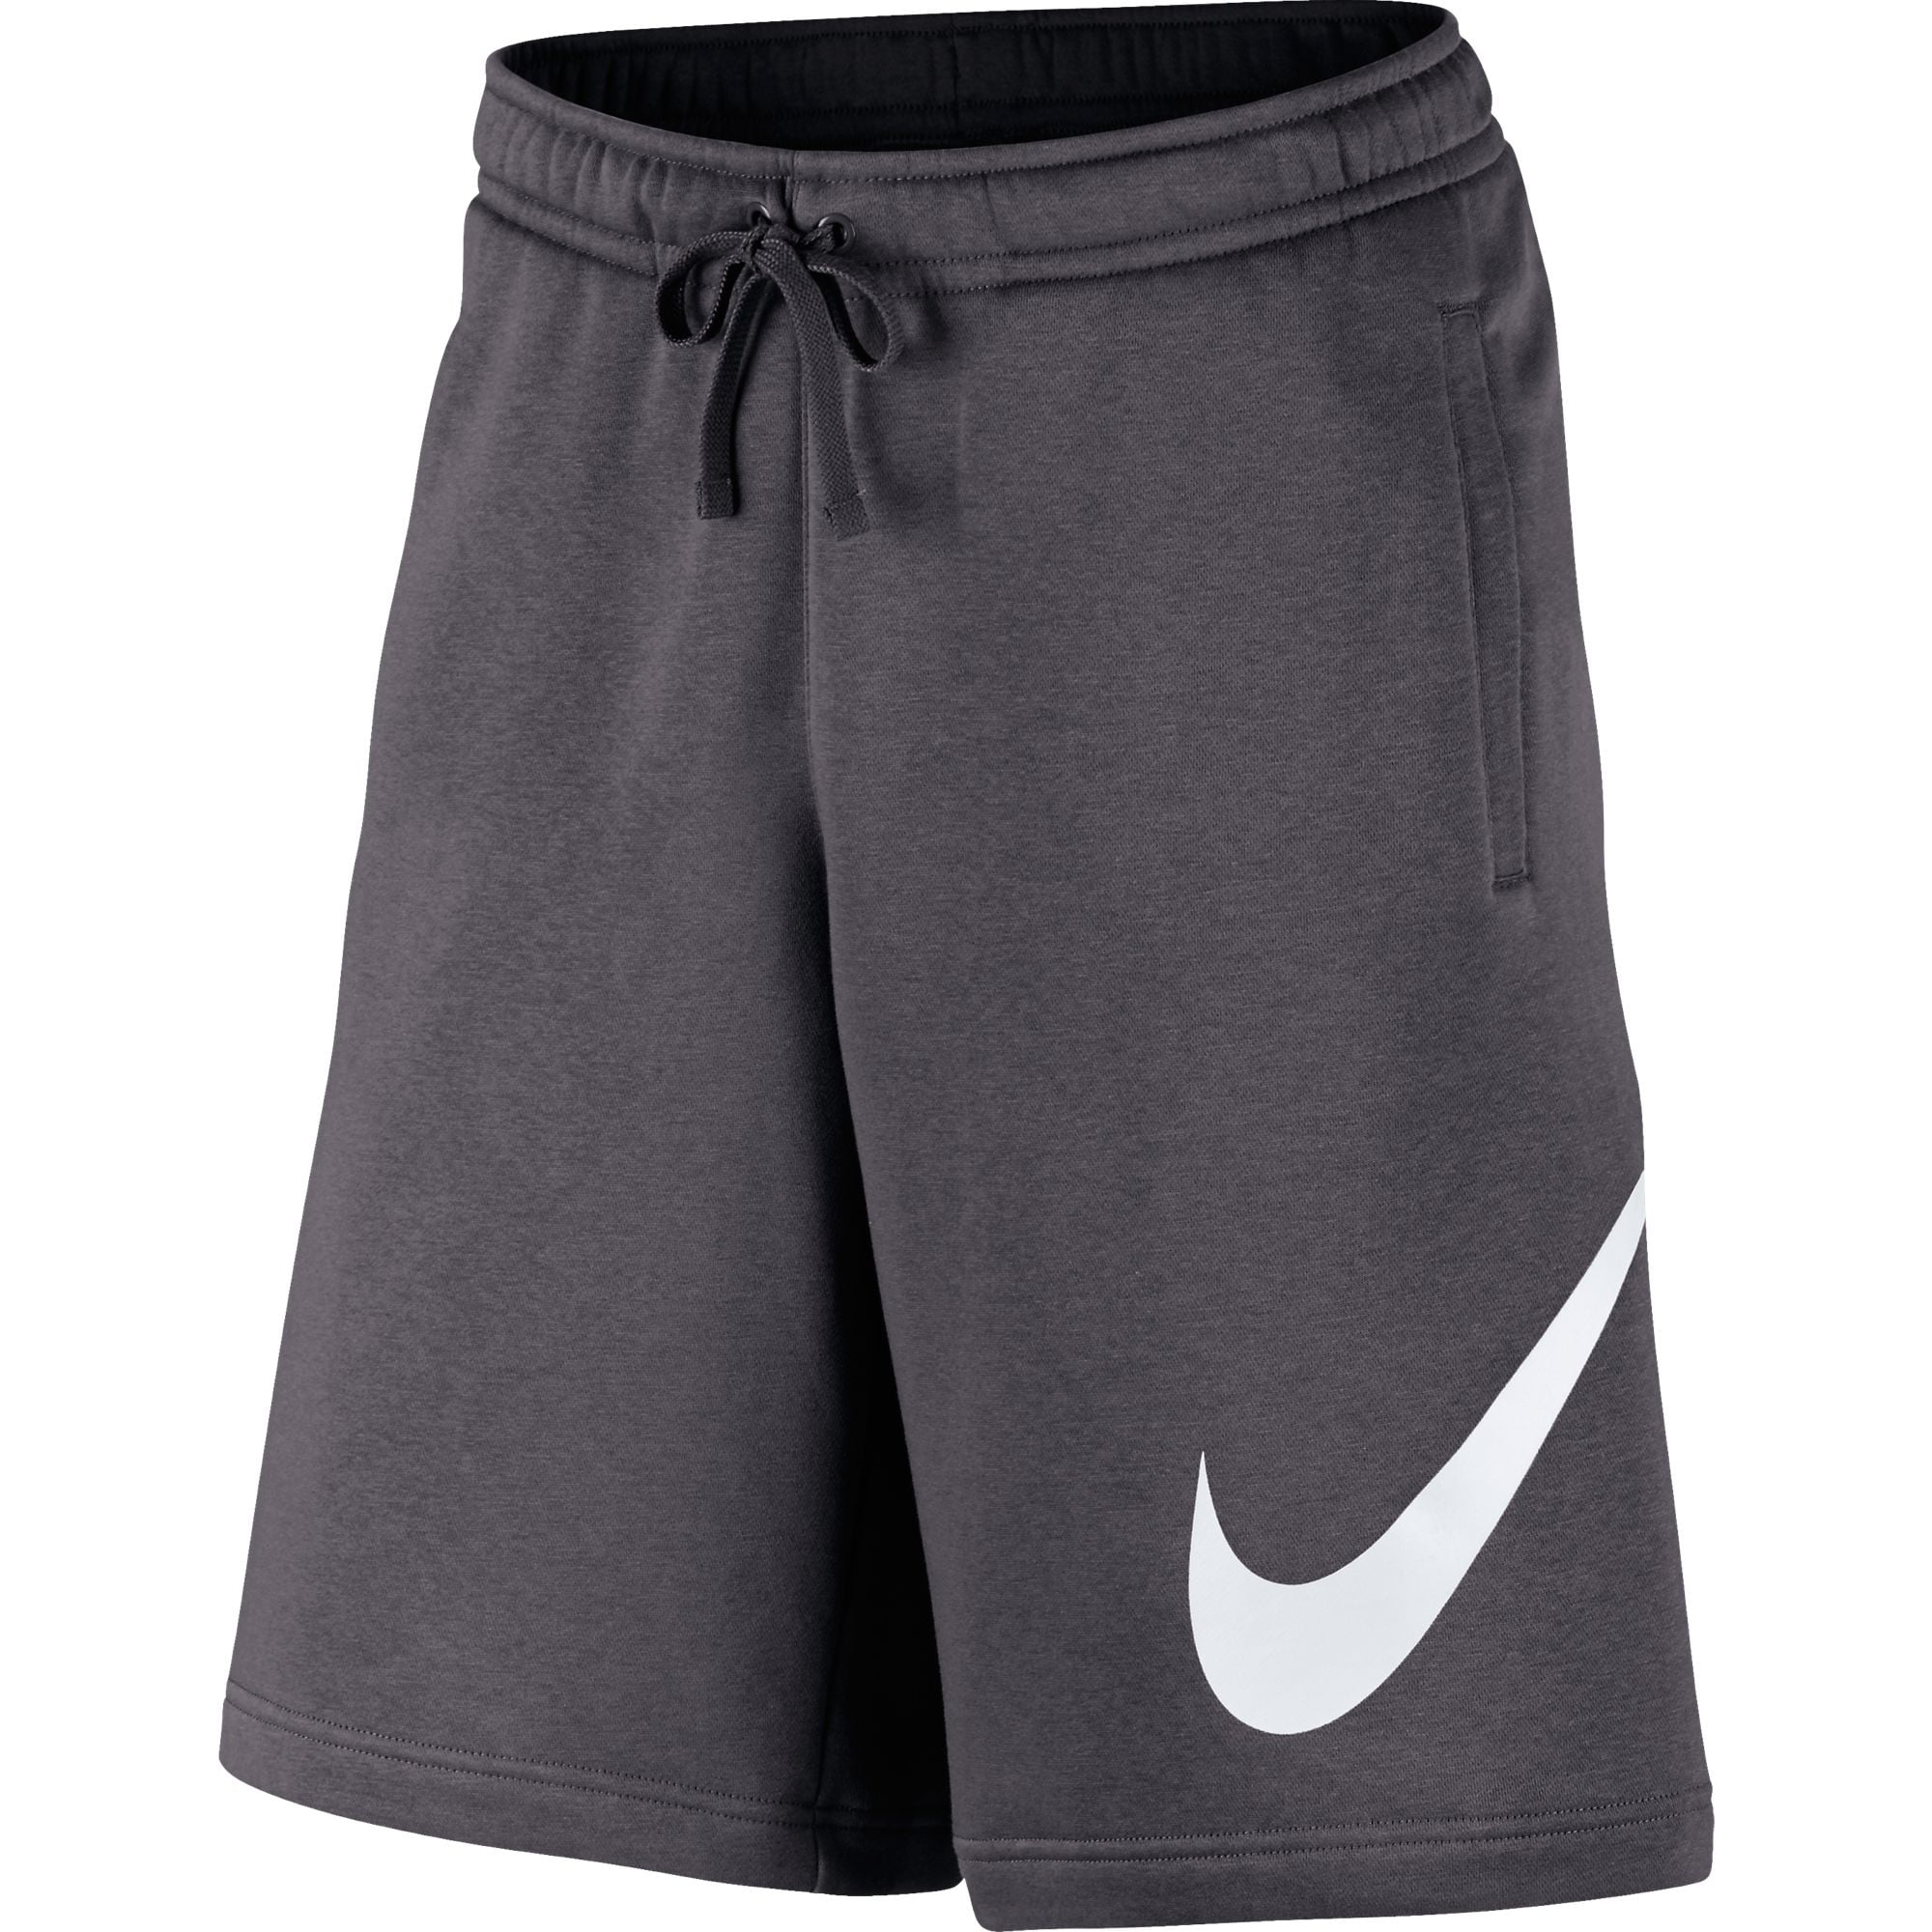 Nike Men's Explosive Sweat Shorts Gunsmoke Grey/White 843520-036 ...